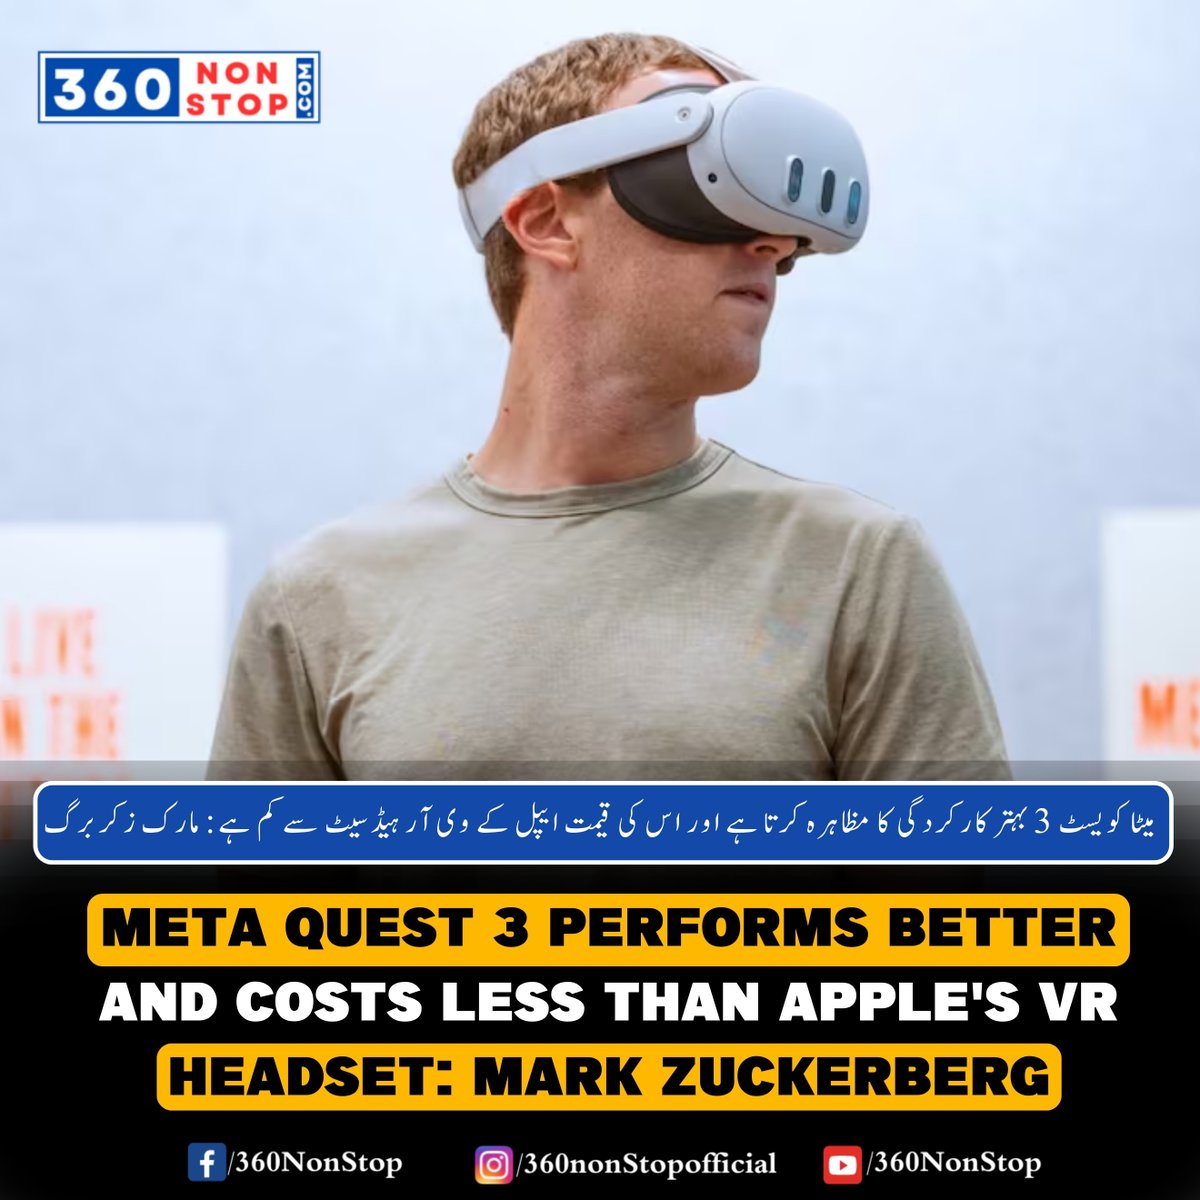 🕶️ Tech Insight: میٹا کویسٹ 3 بہتر کارکردگی کا مظاہرہ کرتا ہے اور اس کی قیمت ایپل کے وی آر ہیڈسیٹ سے کم ہے: مارک زکربرگ. Tech Comparison! 🌐 Meta Quest 3 showcases superior performance and comes at a lower cost compared to Apple's VR headset: Mark Zuckerberg #MetaQuest3